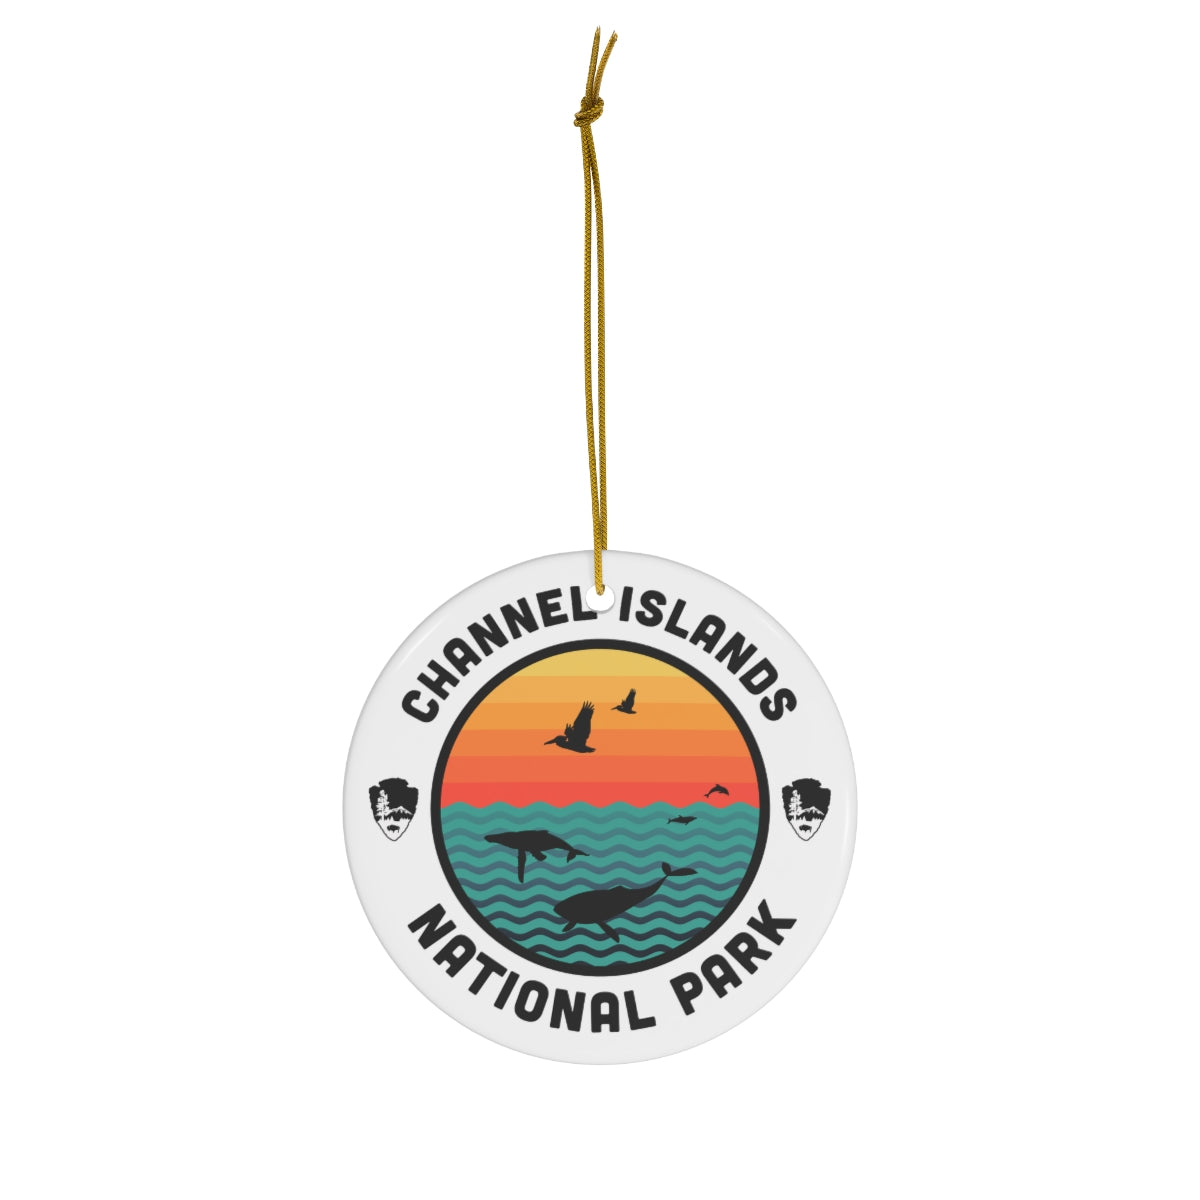 Channel Islands National Park Ornament - Round Emblem Design